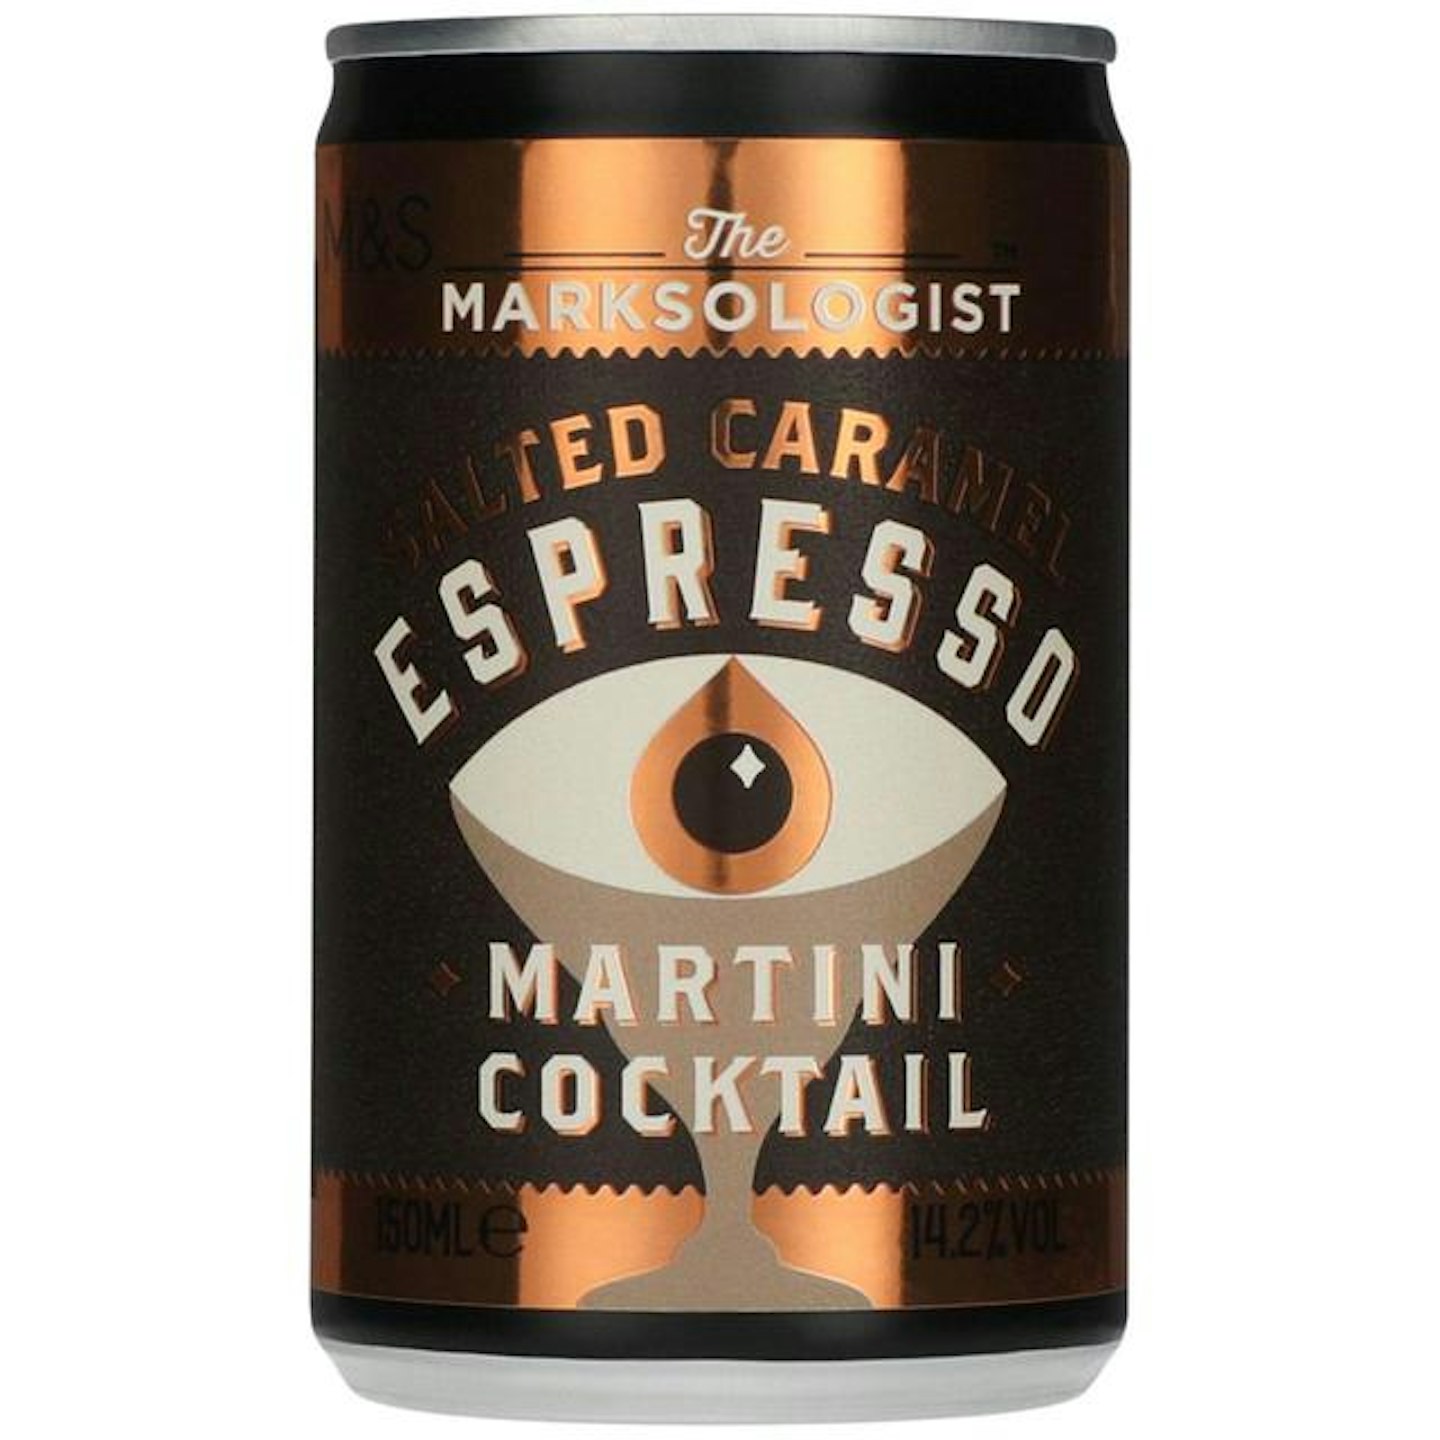 M&S Marksologist Salted Caramel Espresso Martini